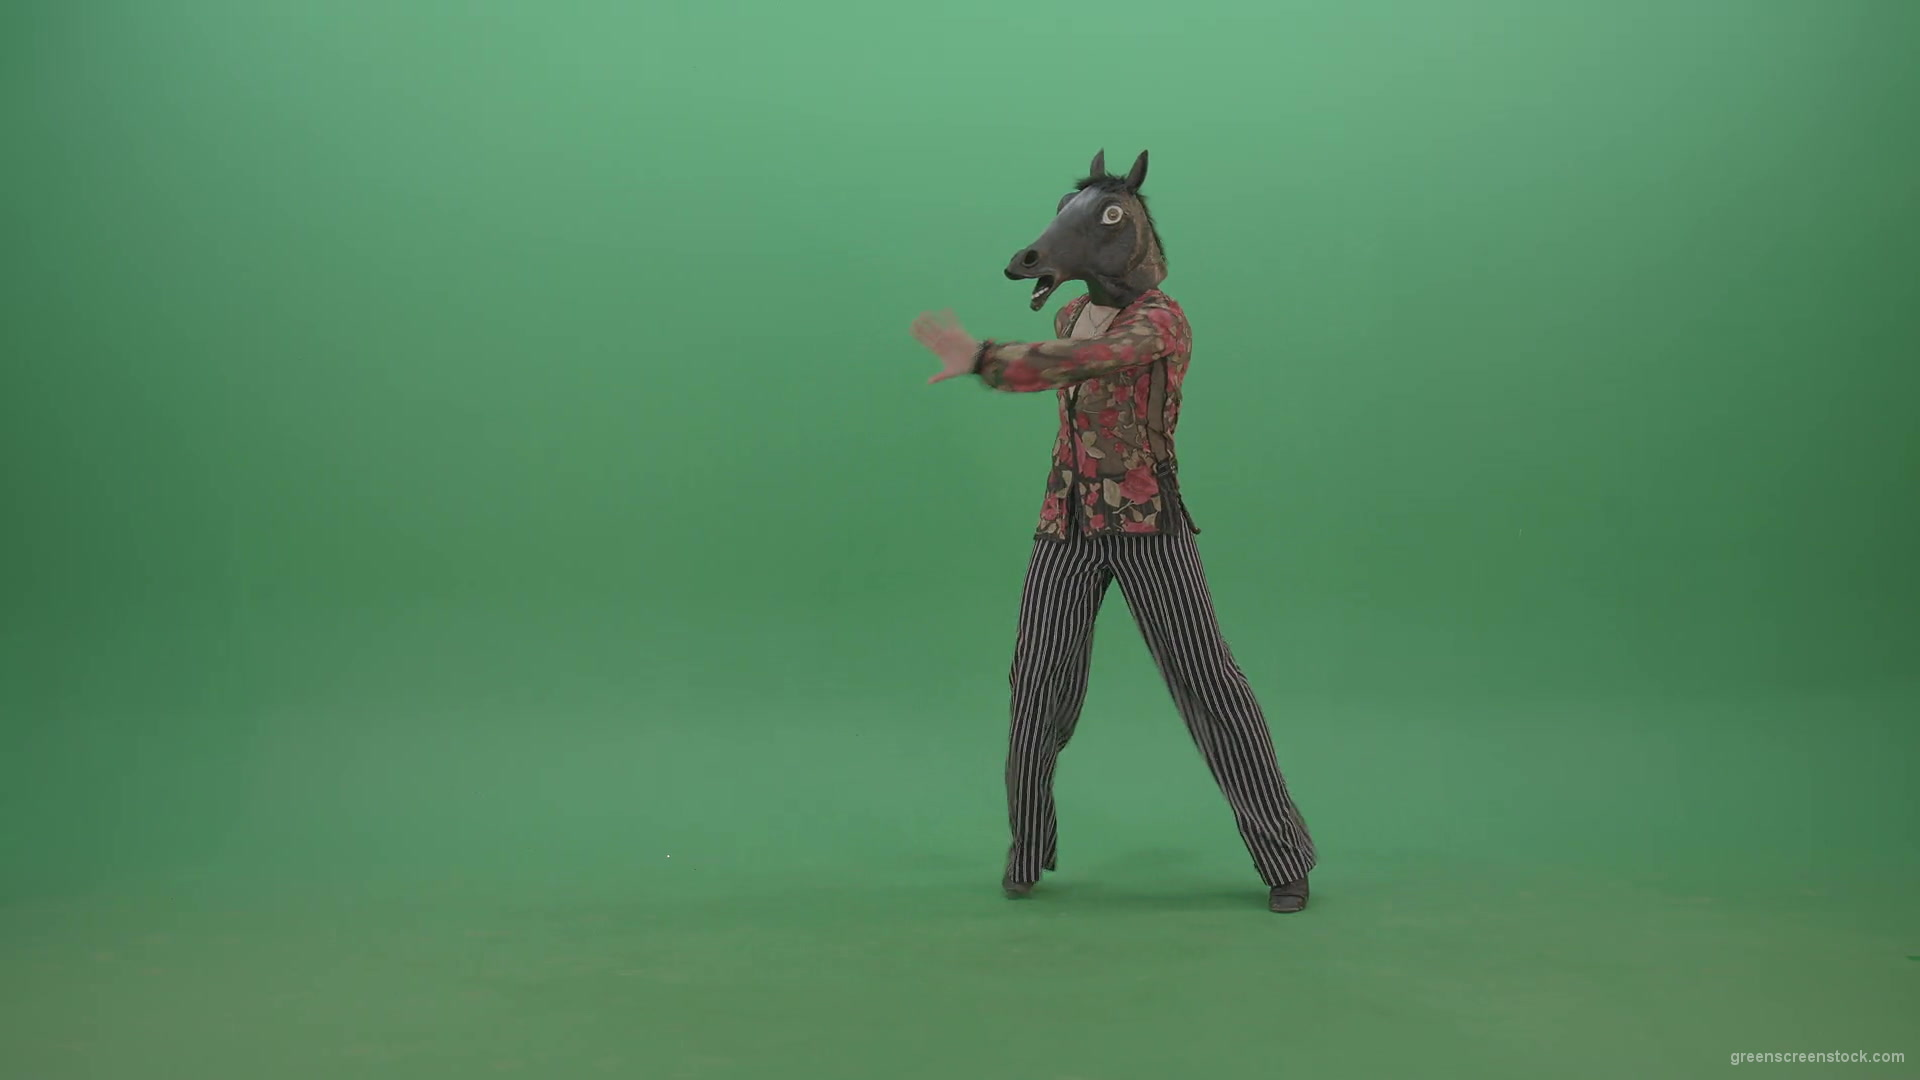 Fanny-dancing-Horse-Man-showing-ballroom-dance-on-green-screen-4K-Video-Footage-1920_005 Green Screen Stock